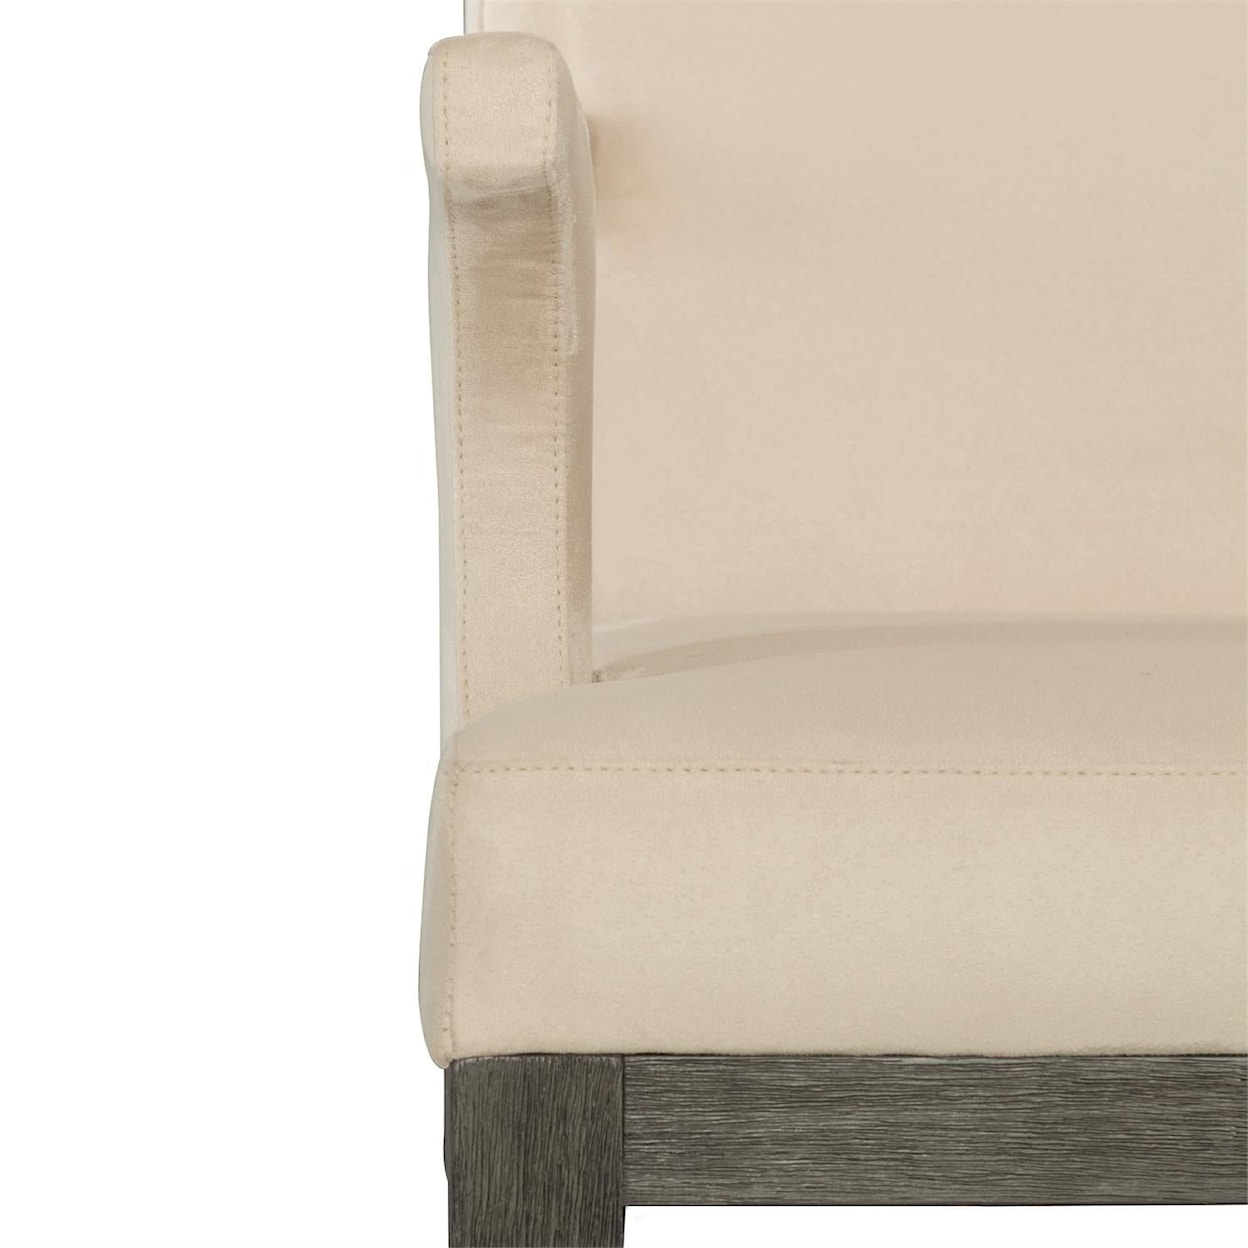 Bernhardt Bernhardt Interiors Staley Fabric Arm Chair